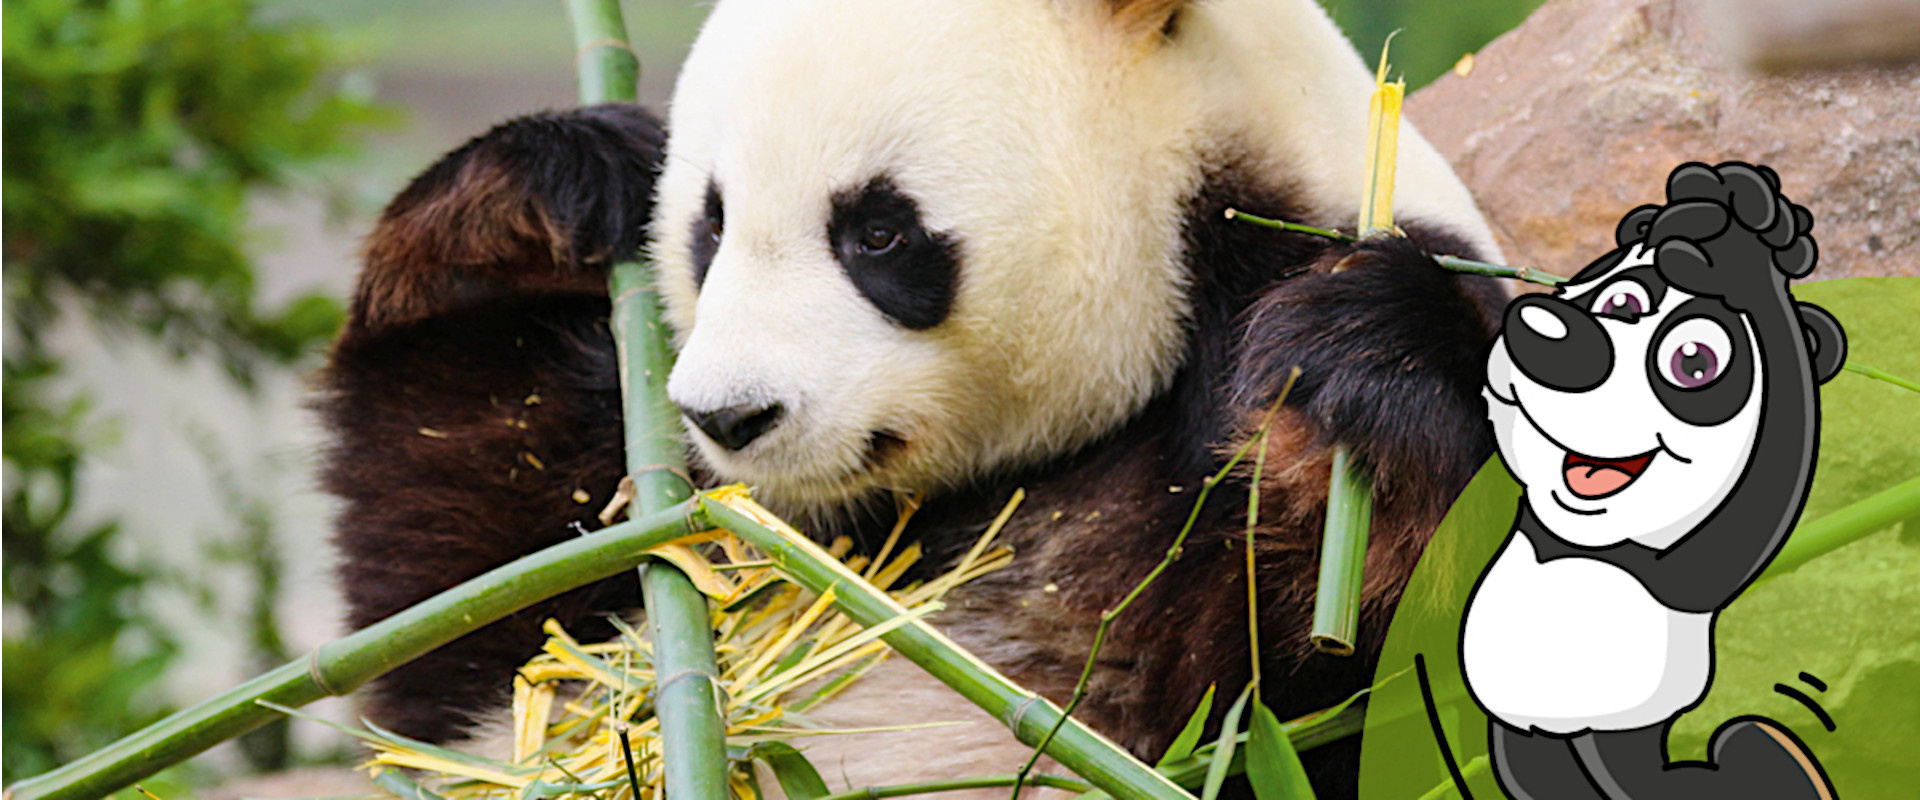 Panda avec bambou